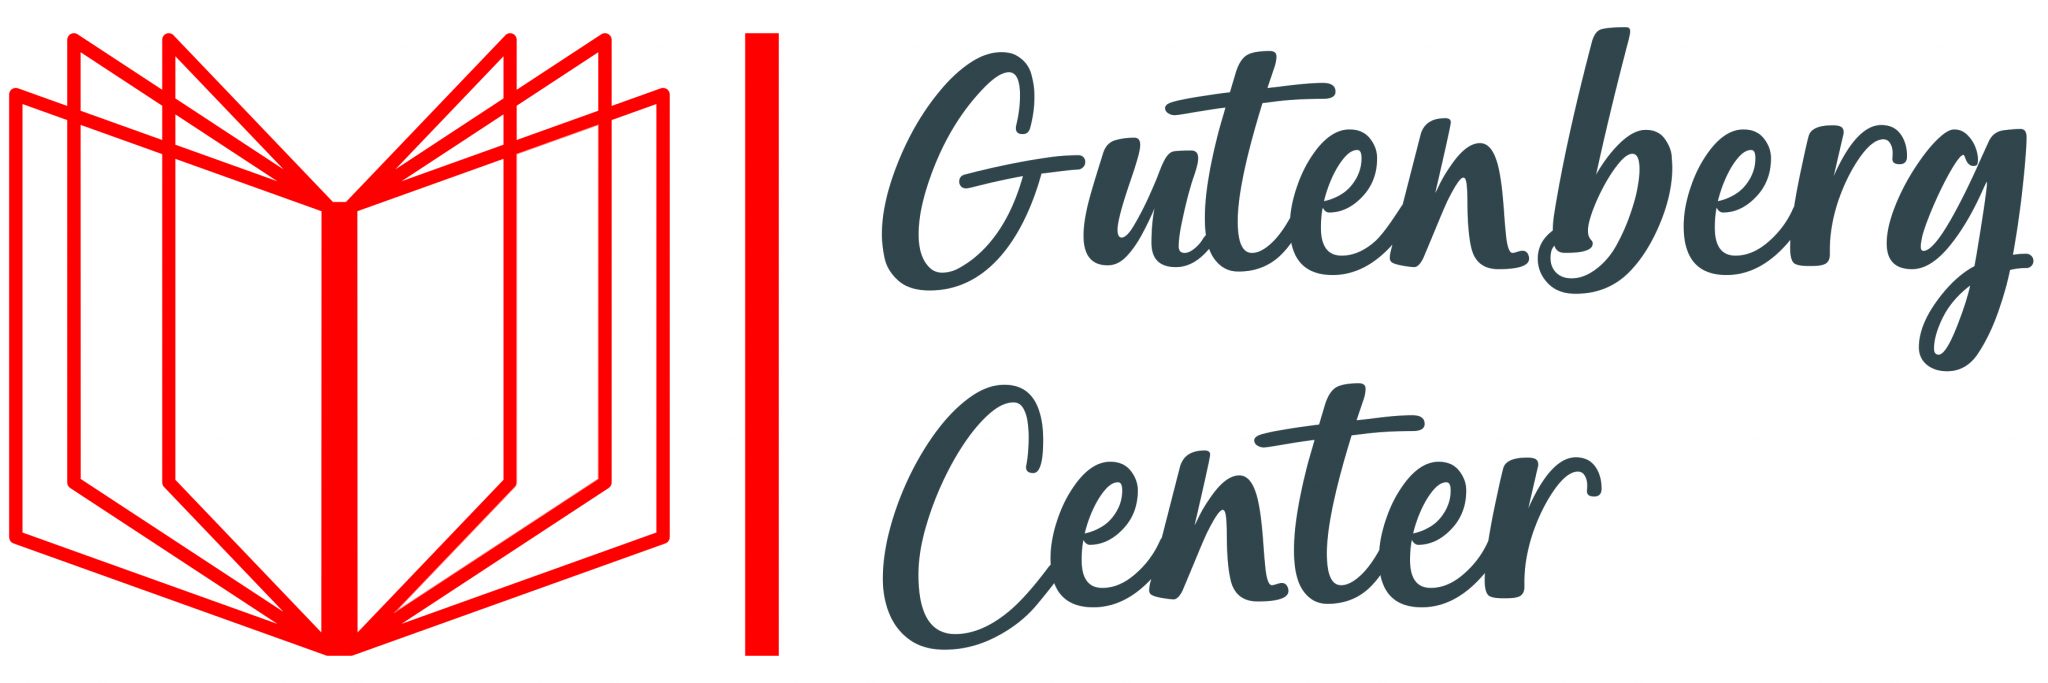 Gutenberg Center